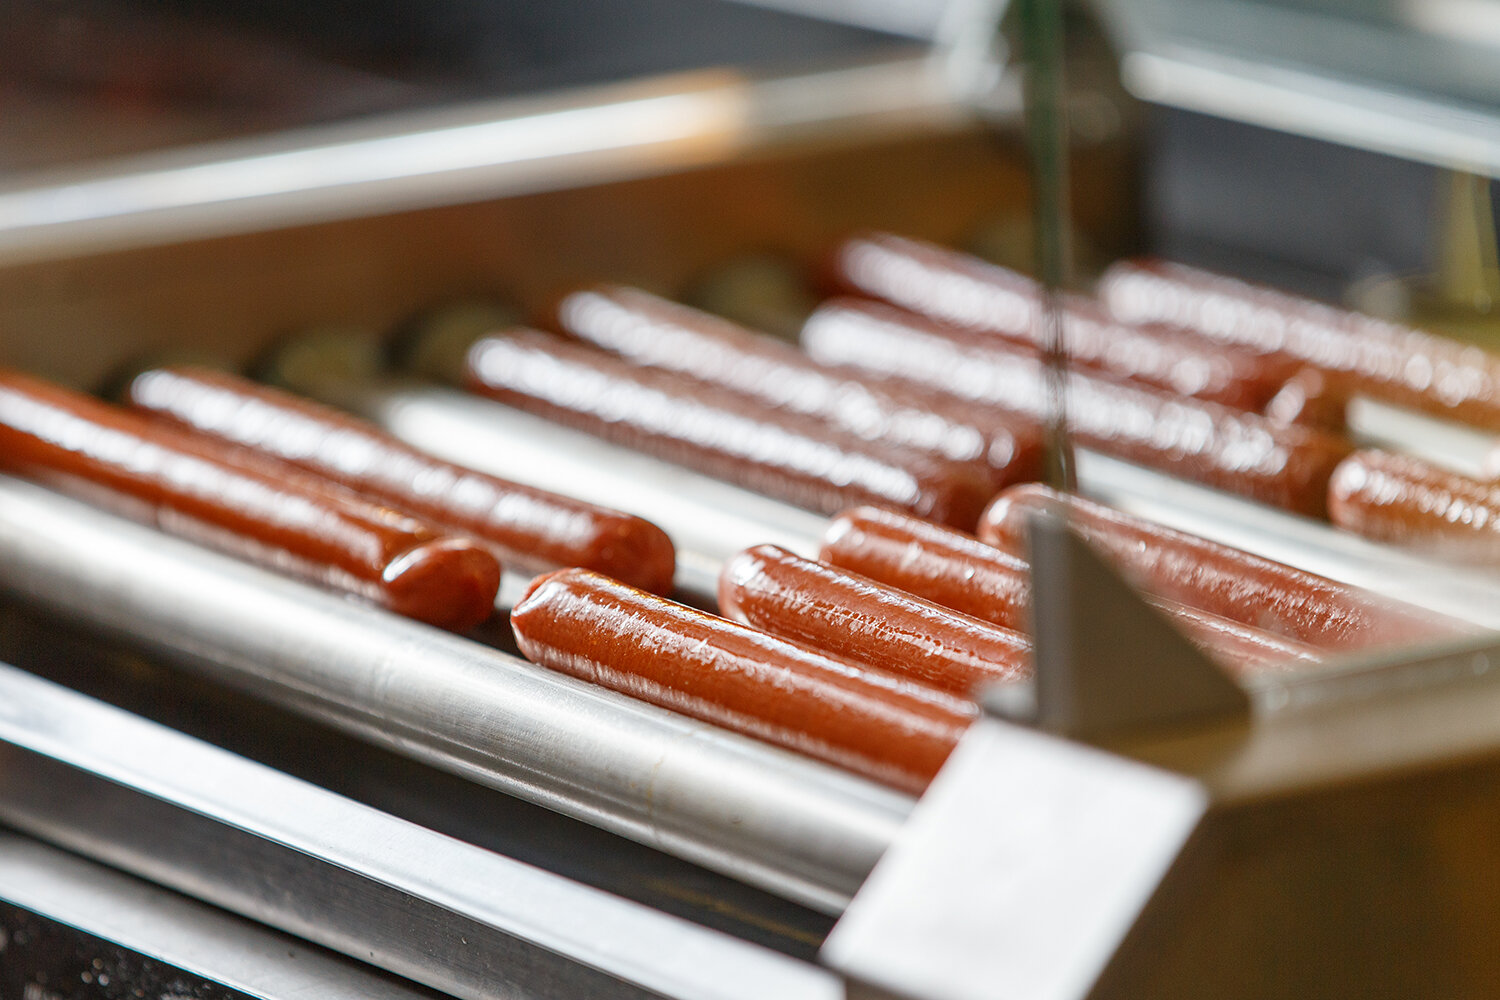 bigstock-Greasy-Hot-Dog-Sausages-On-Tur-251512960 web.jpg